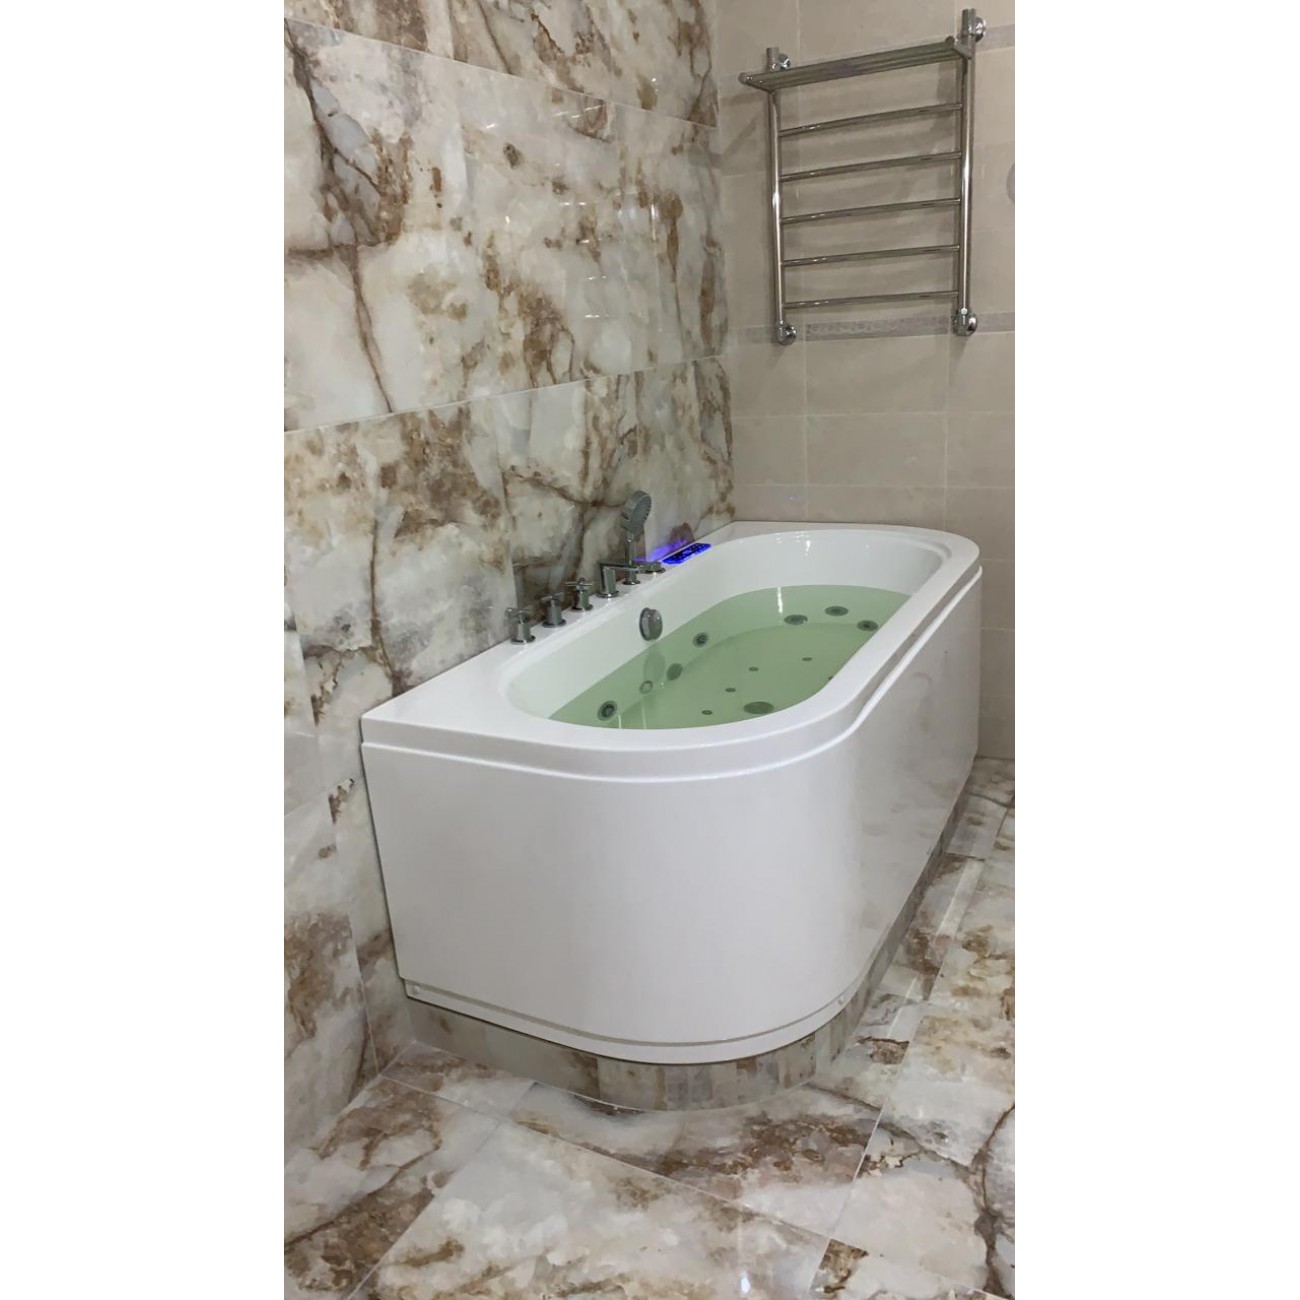 Гидромассажная ванна Frank 170x80 F160 пристенная, белая, размер 170x80, цвет белый 20156060 - фото 5